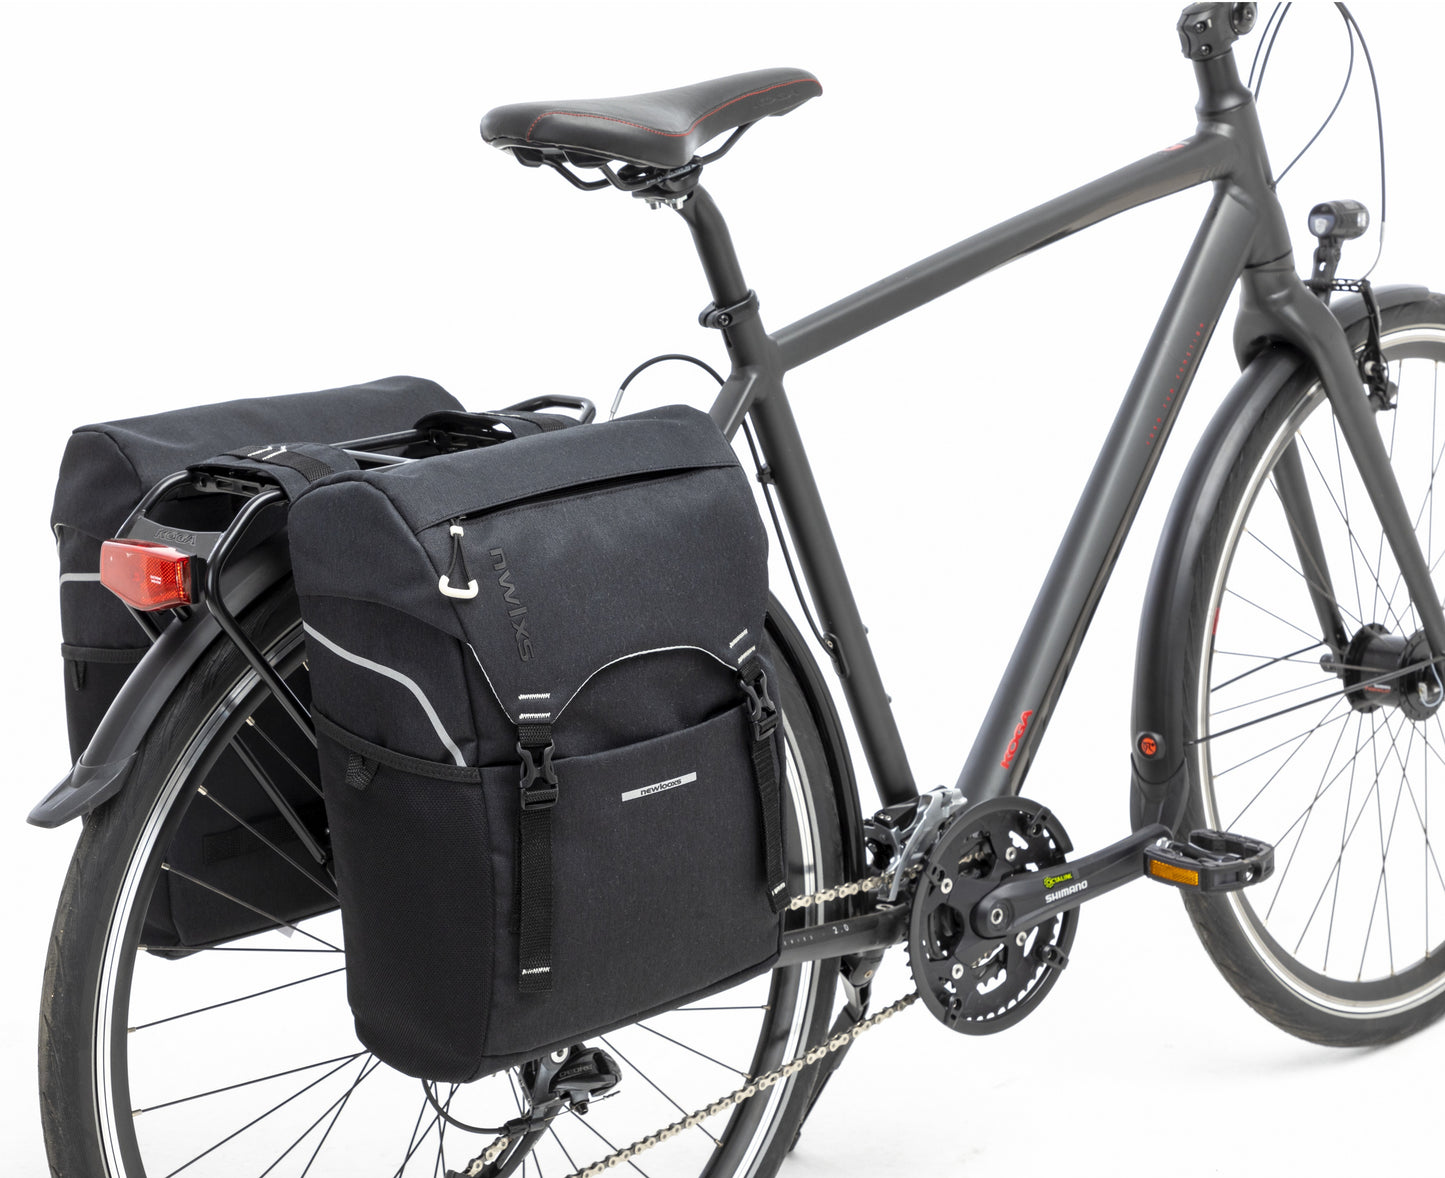 Nuevo Looxs Sports Double Bicycle Bag Black Gray